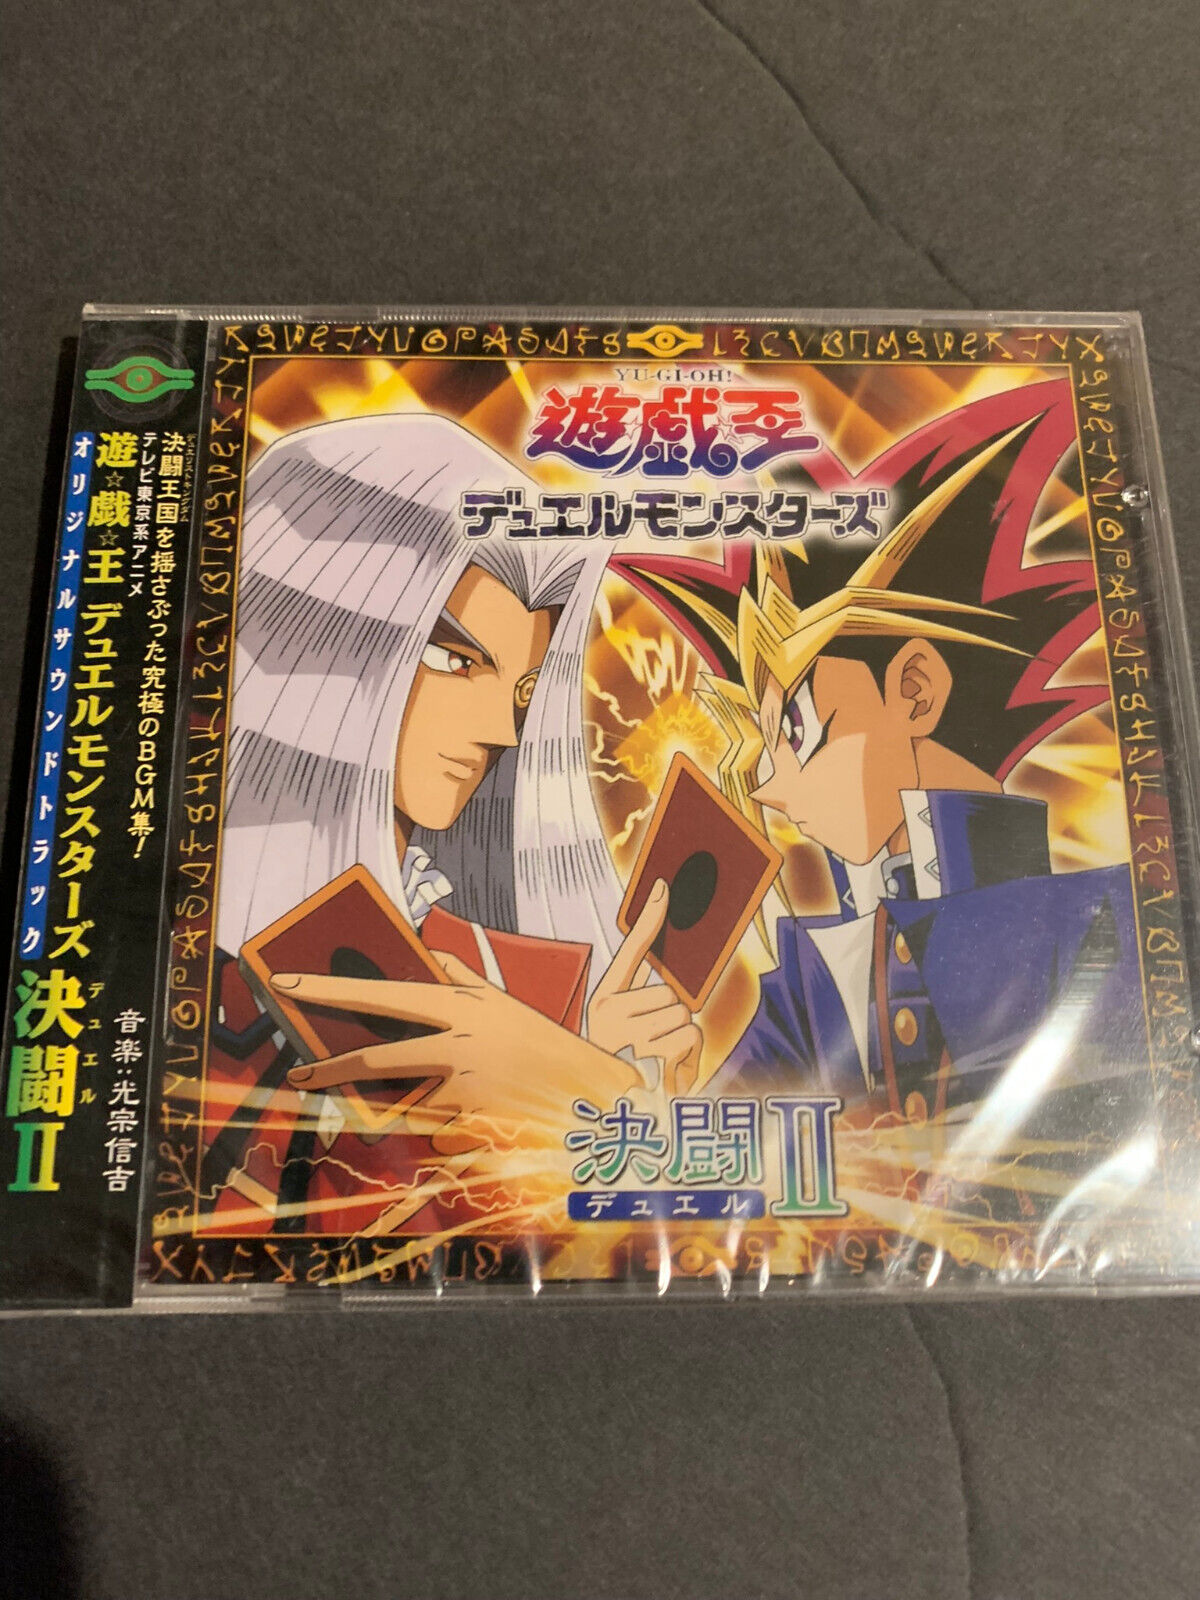 YU-GI-OH DUEL MONSTERS II 2 ORIGINAL SOUNDTRACK series anime battle music CD ost